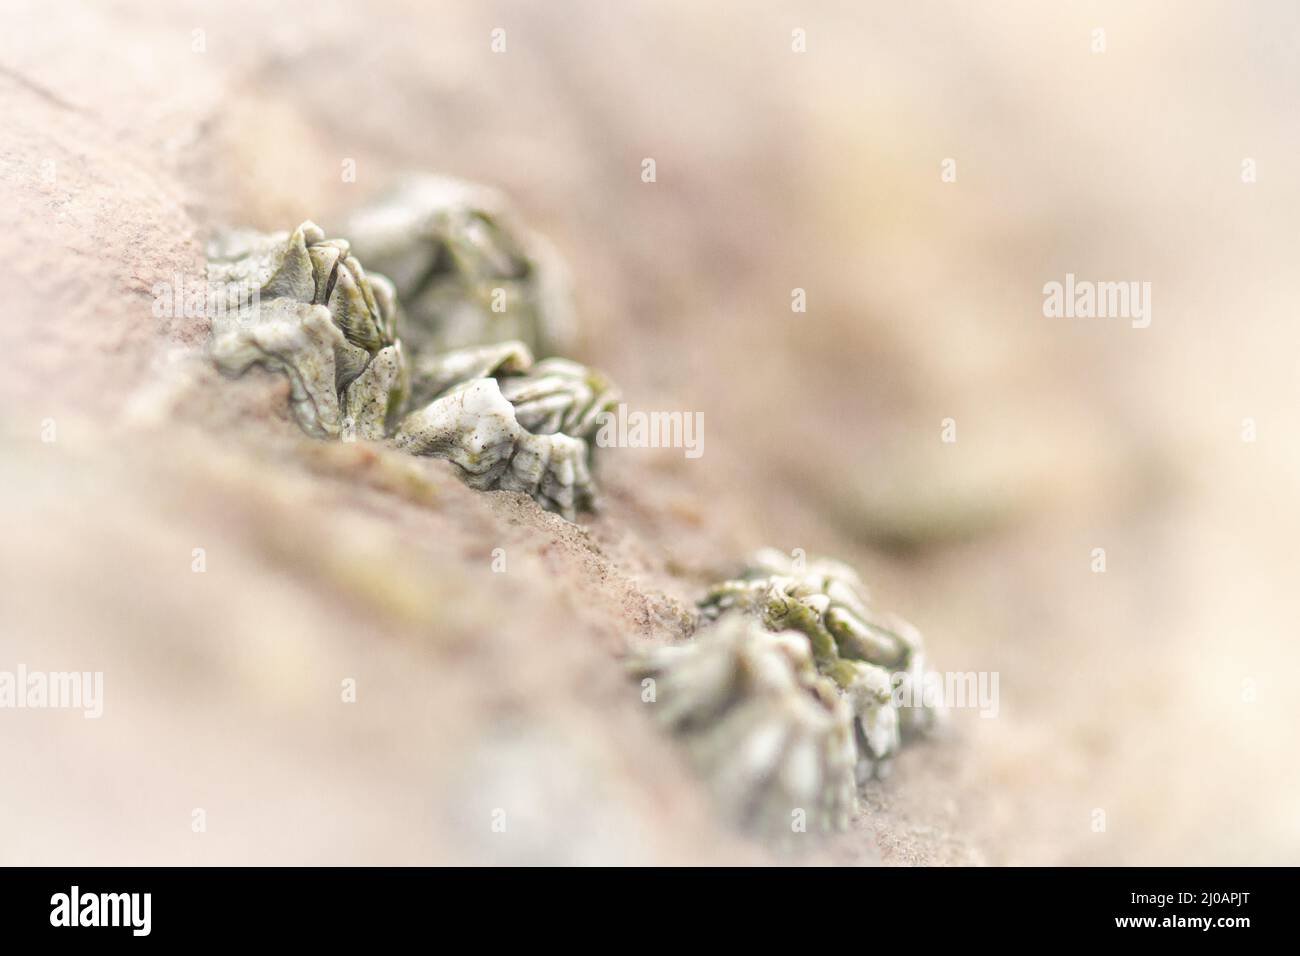 The barnacles (Balanus balanus) growing on the rocks of West Beach, Watchet look like an alien landscape when in a macro photograph Stock Photo